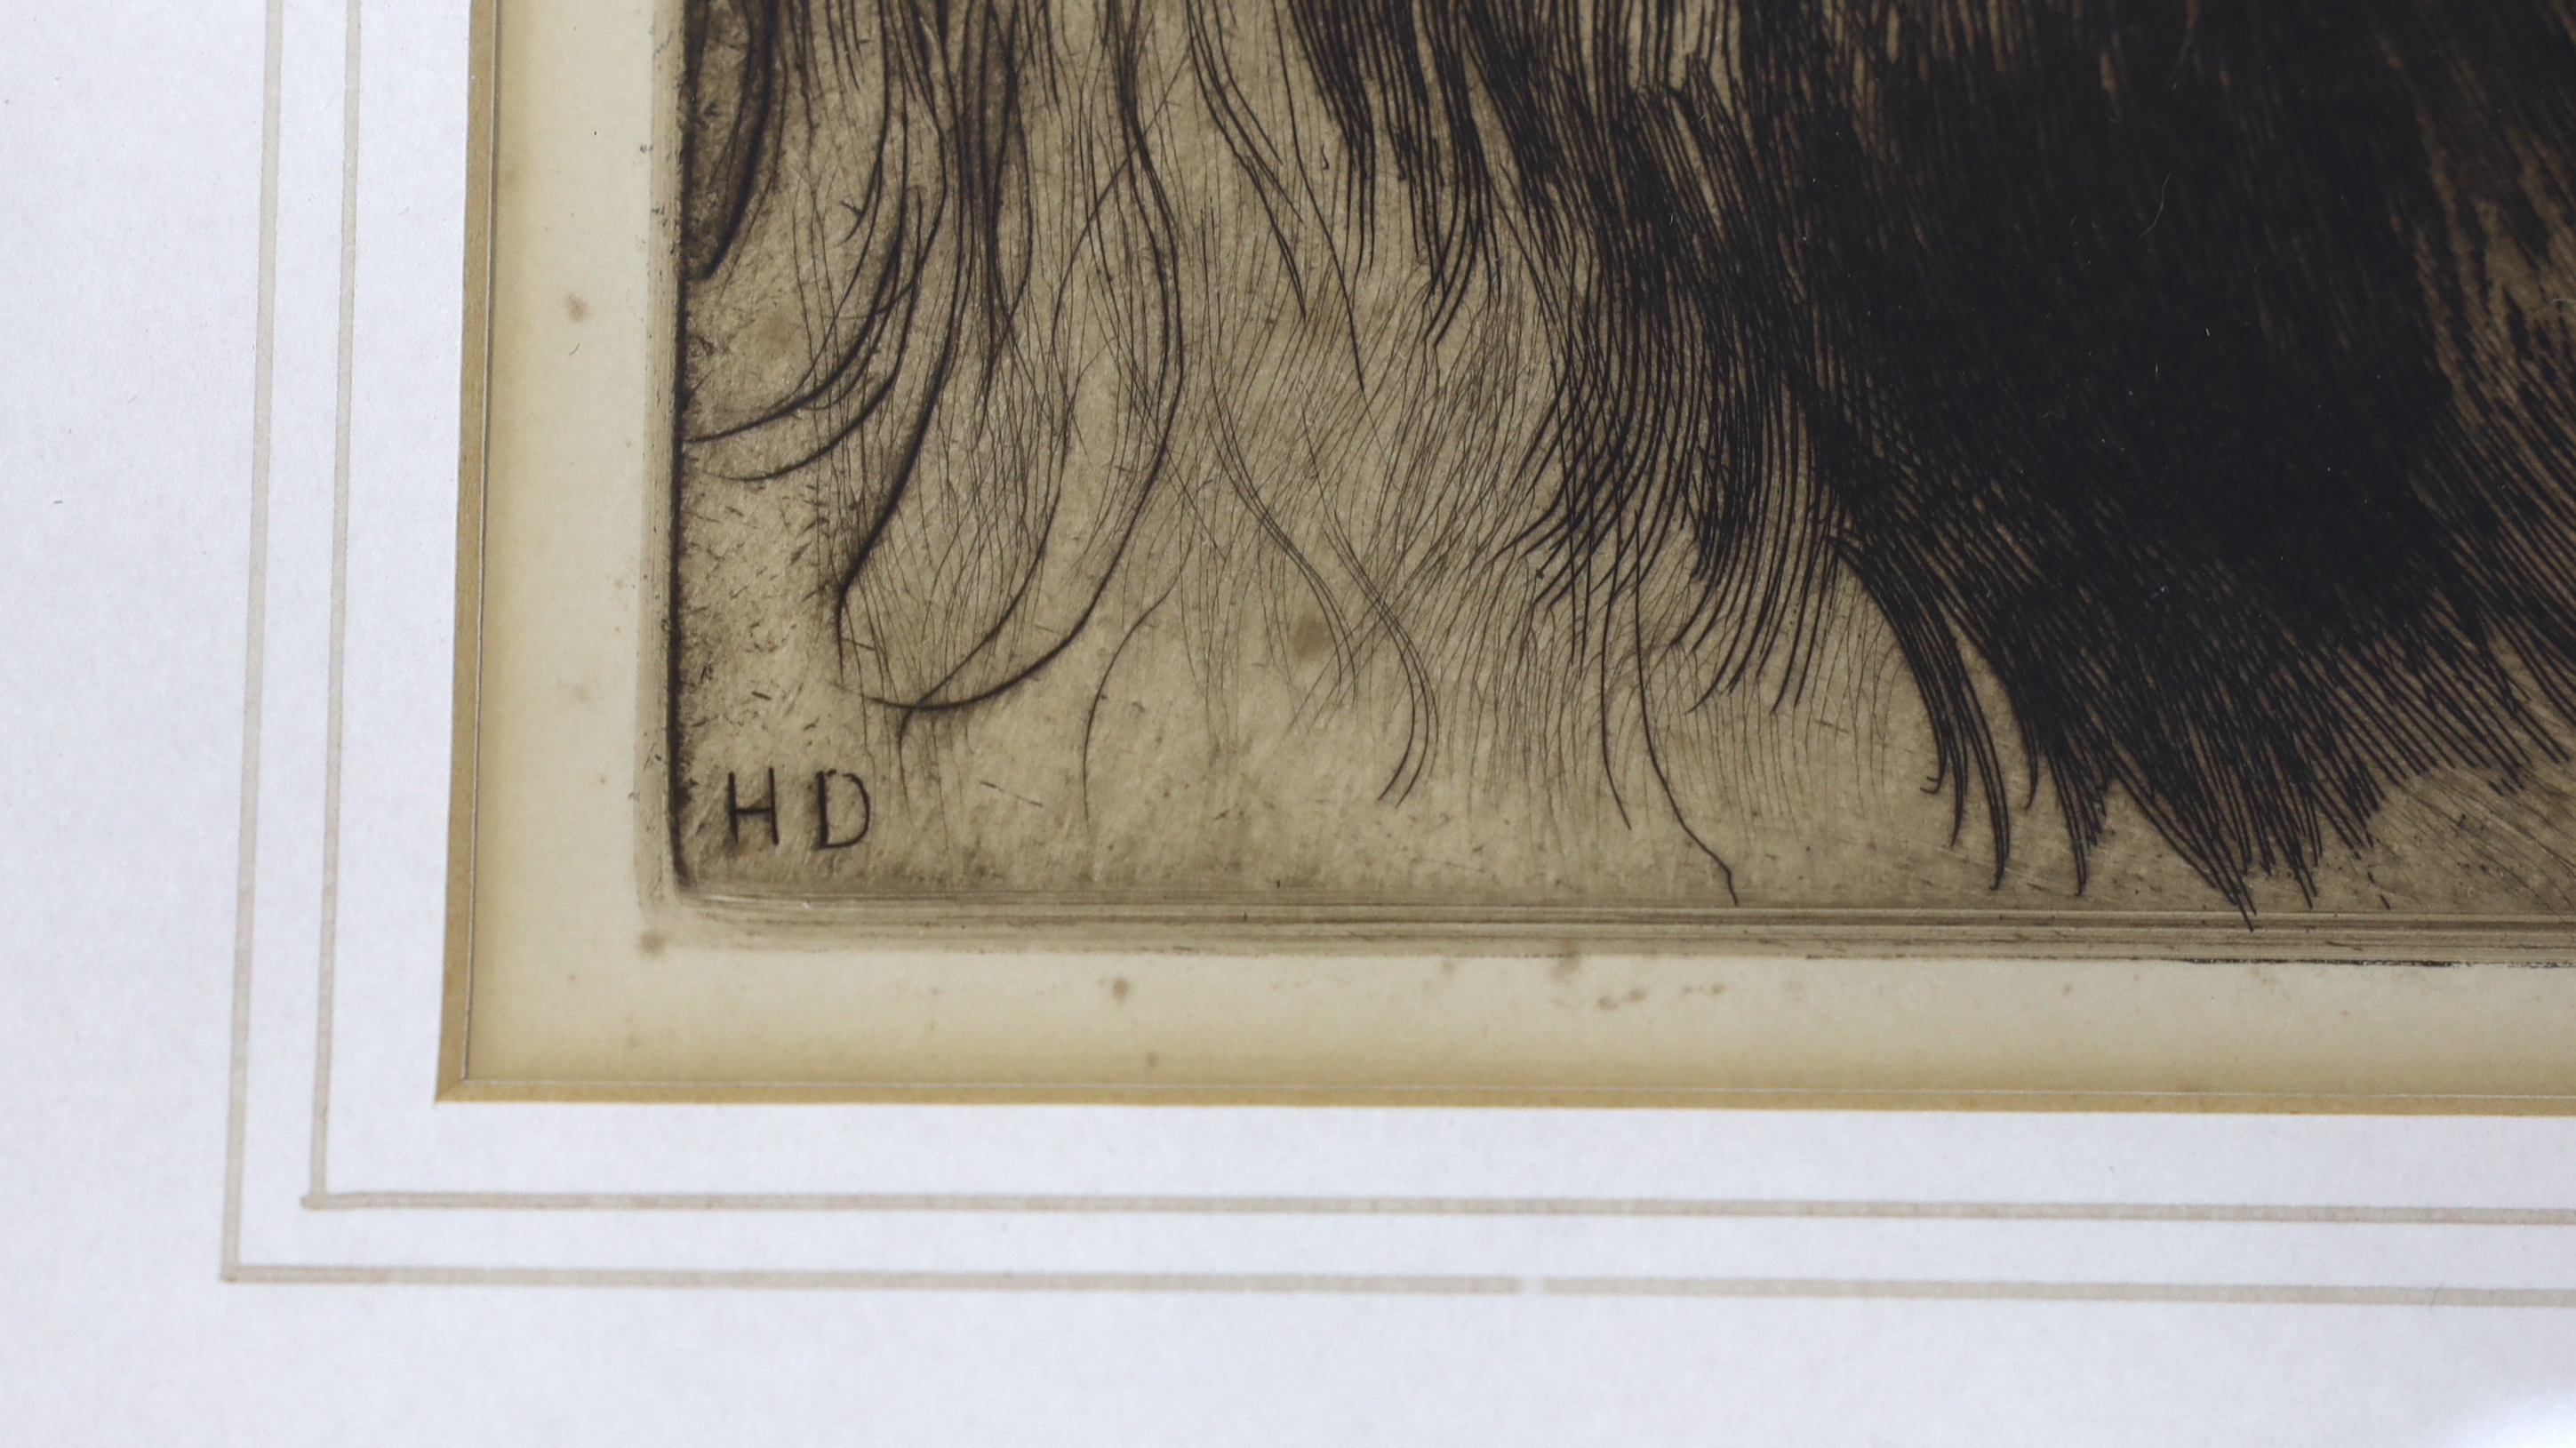 Herbert Dicksee (1862-1942), etching, Head of a Lion, 29 x 21cm